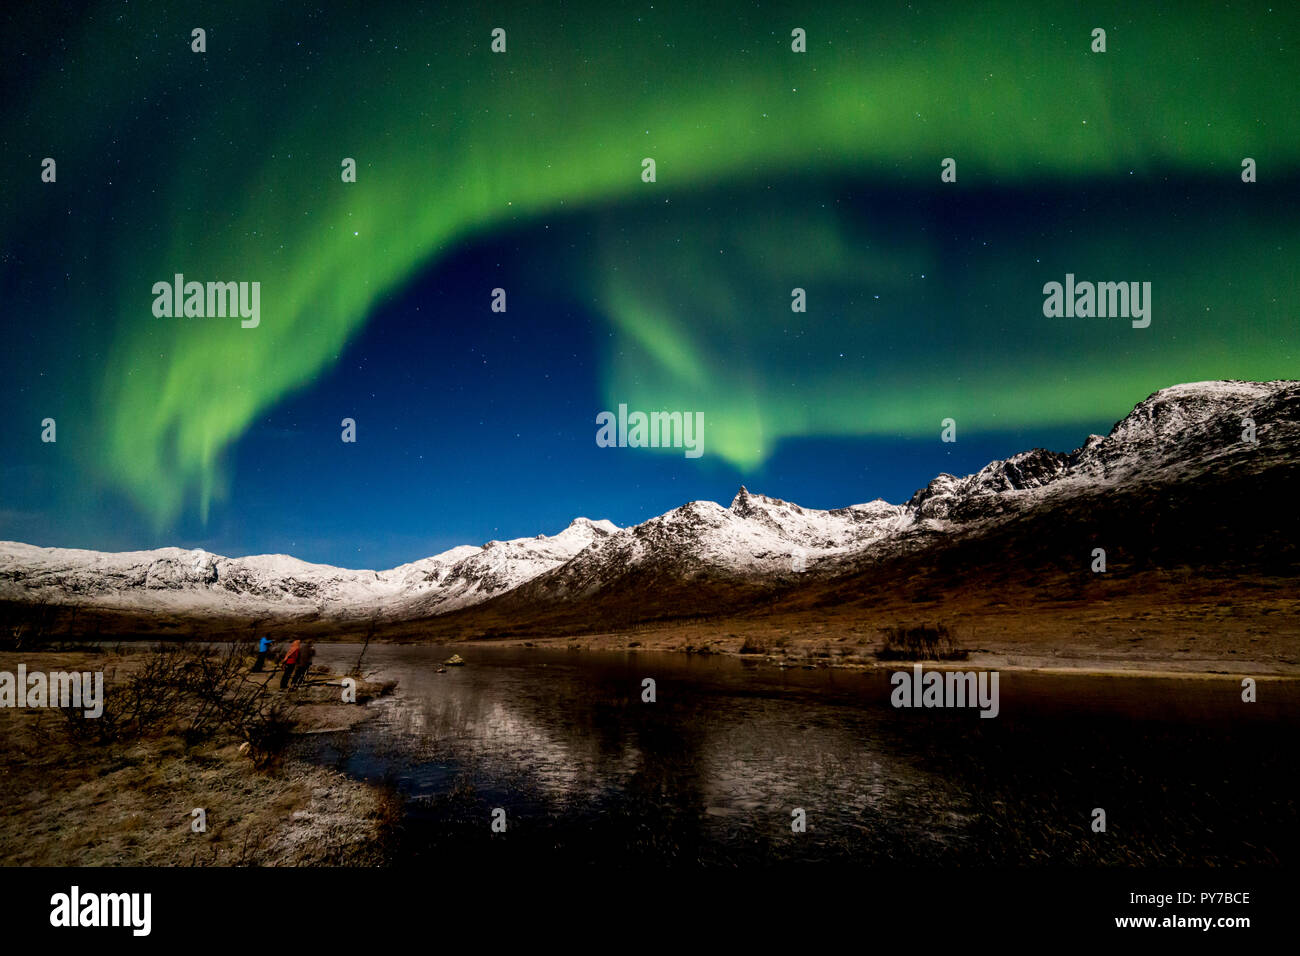 Aurora borealis, Northern Lights, aktive, farbigen Vorhängen, coronas, über Nacht Himmel, Polarkreis, Kvaloya, Insel, Troms, Tromso, Norwegen Stockfoto